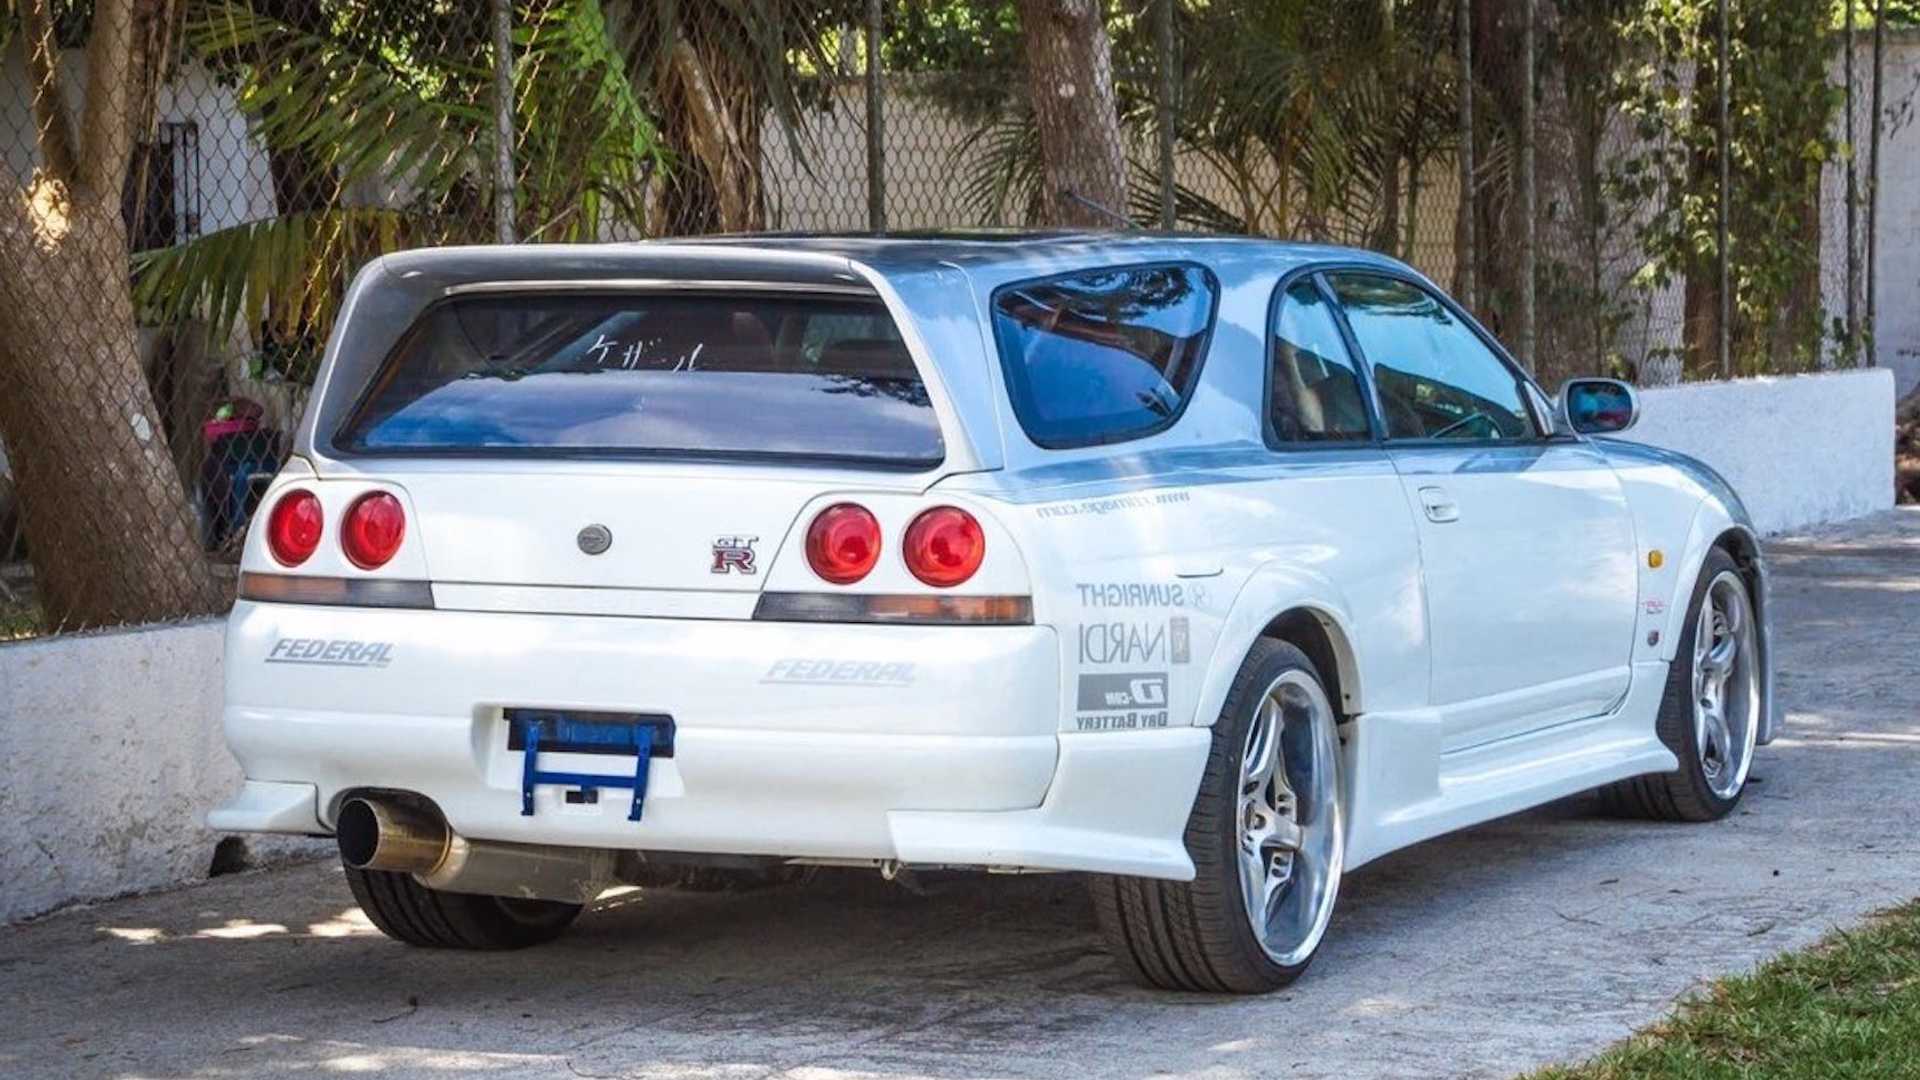 Продава се единственото комби Nissan GT-R